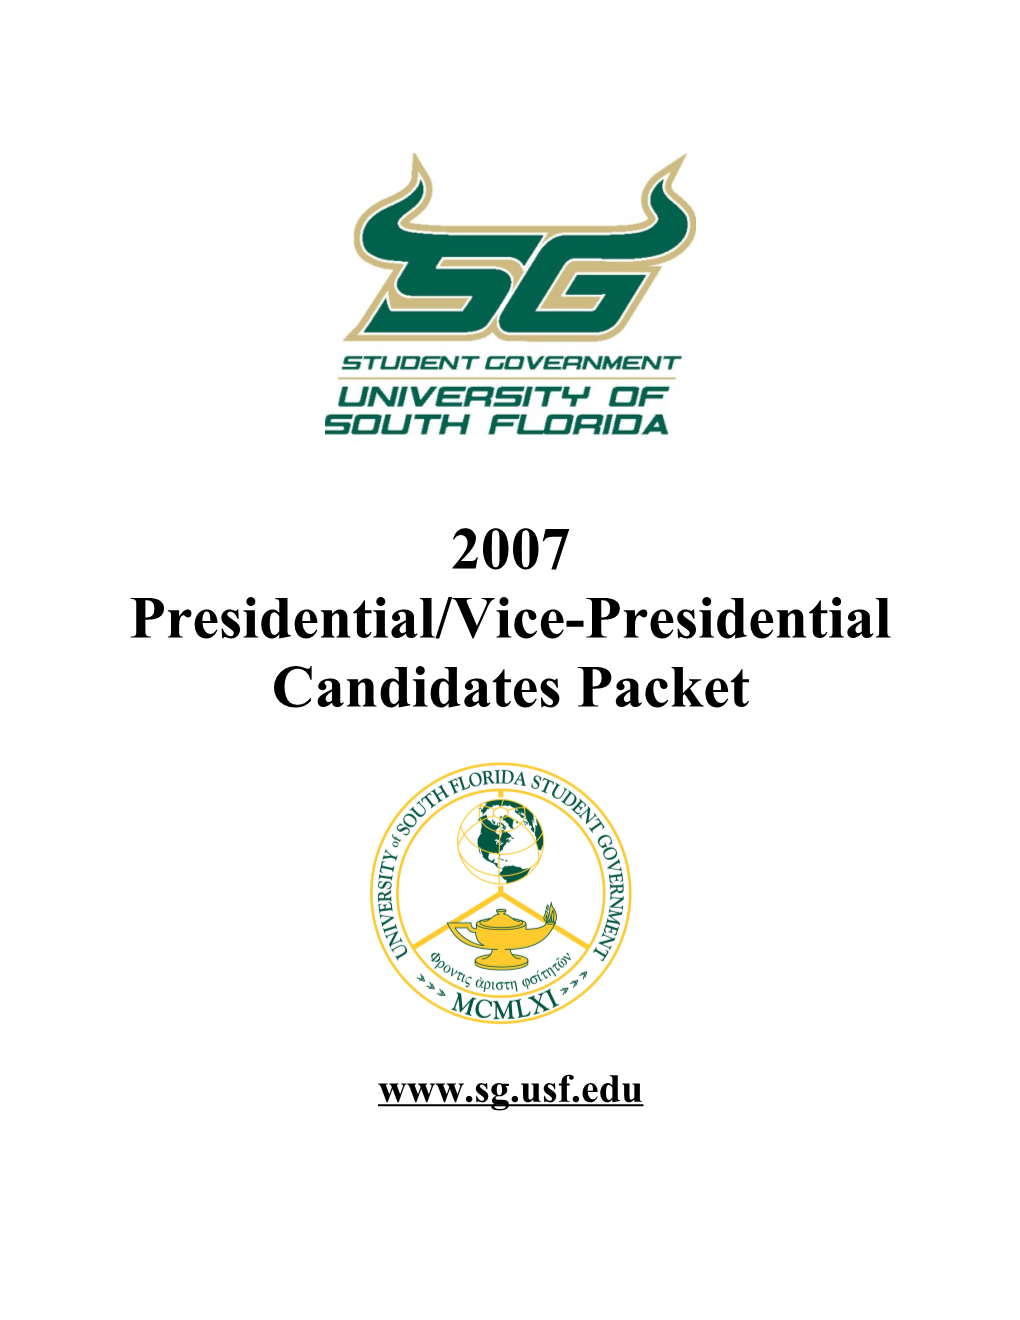 Presidential/Vice-Presidential